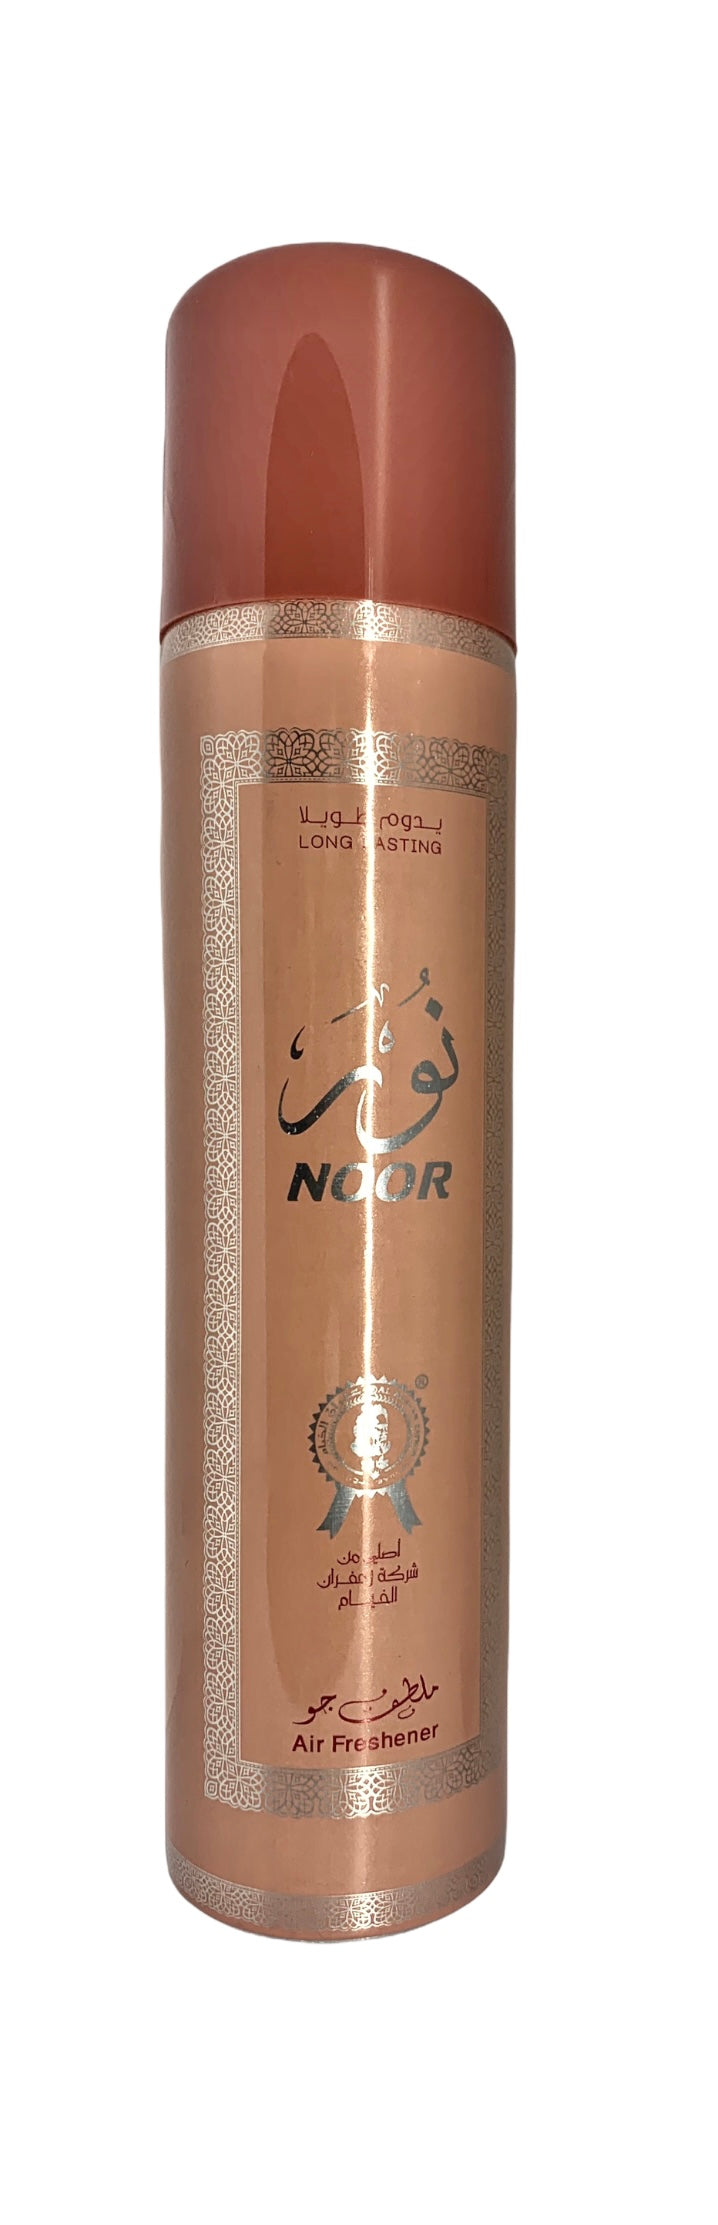 Noor: Al Khayam Zafron Air Freshener 300ml - MyBakhoor